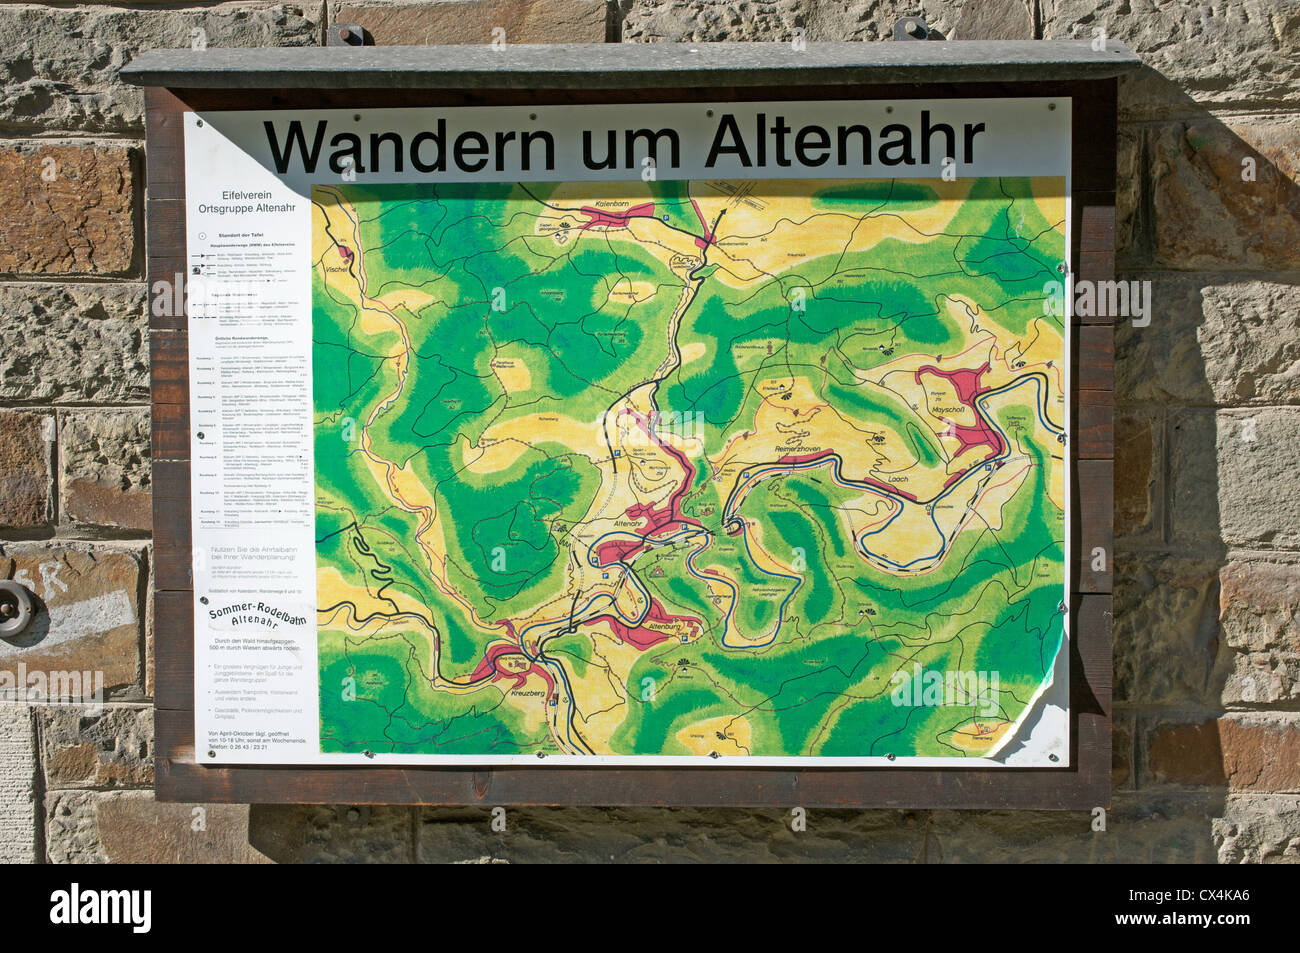 Wandern um Altenahr map, Germany. Stock Photo